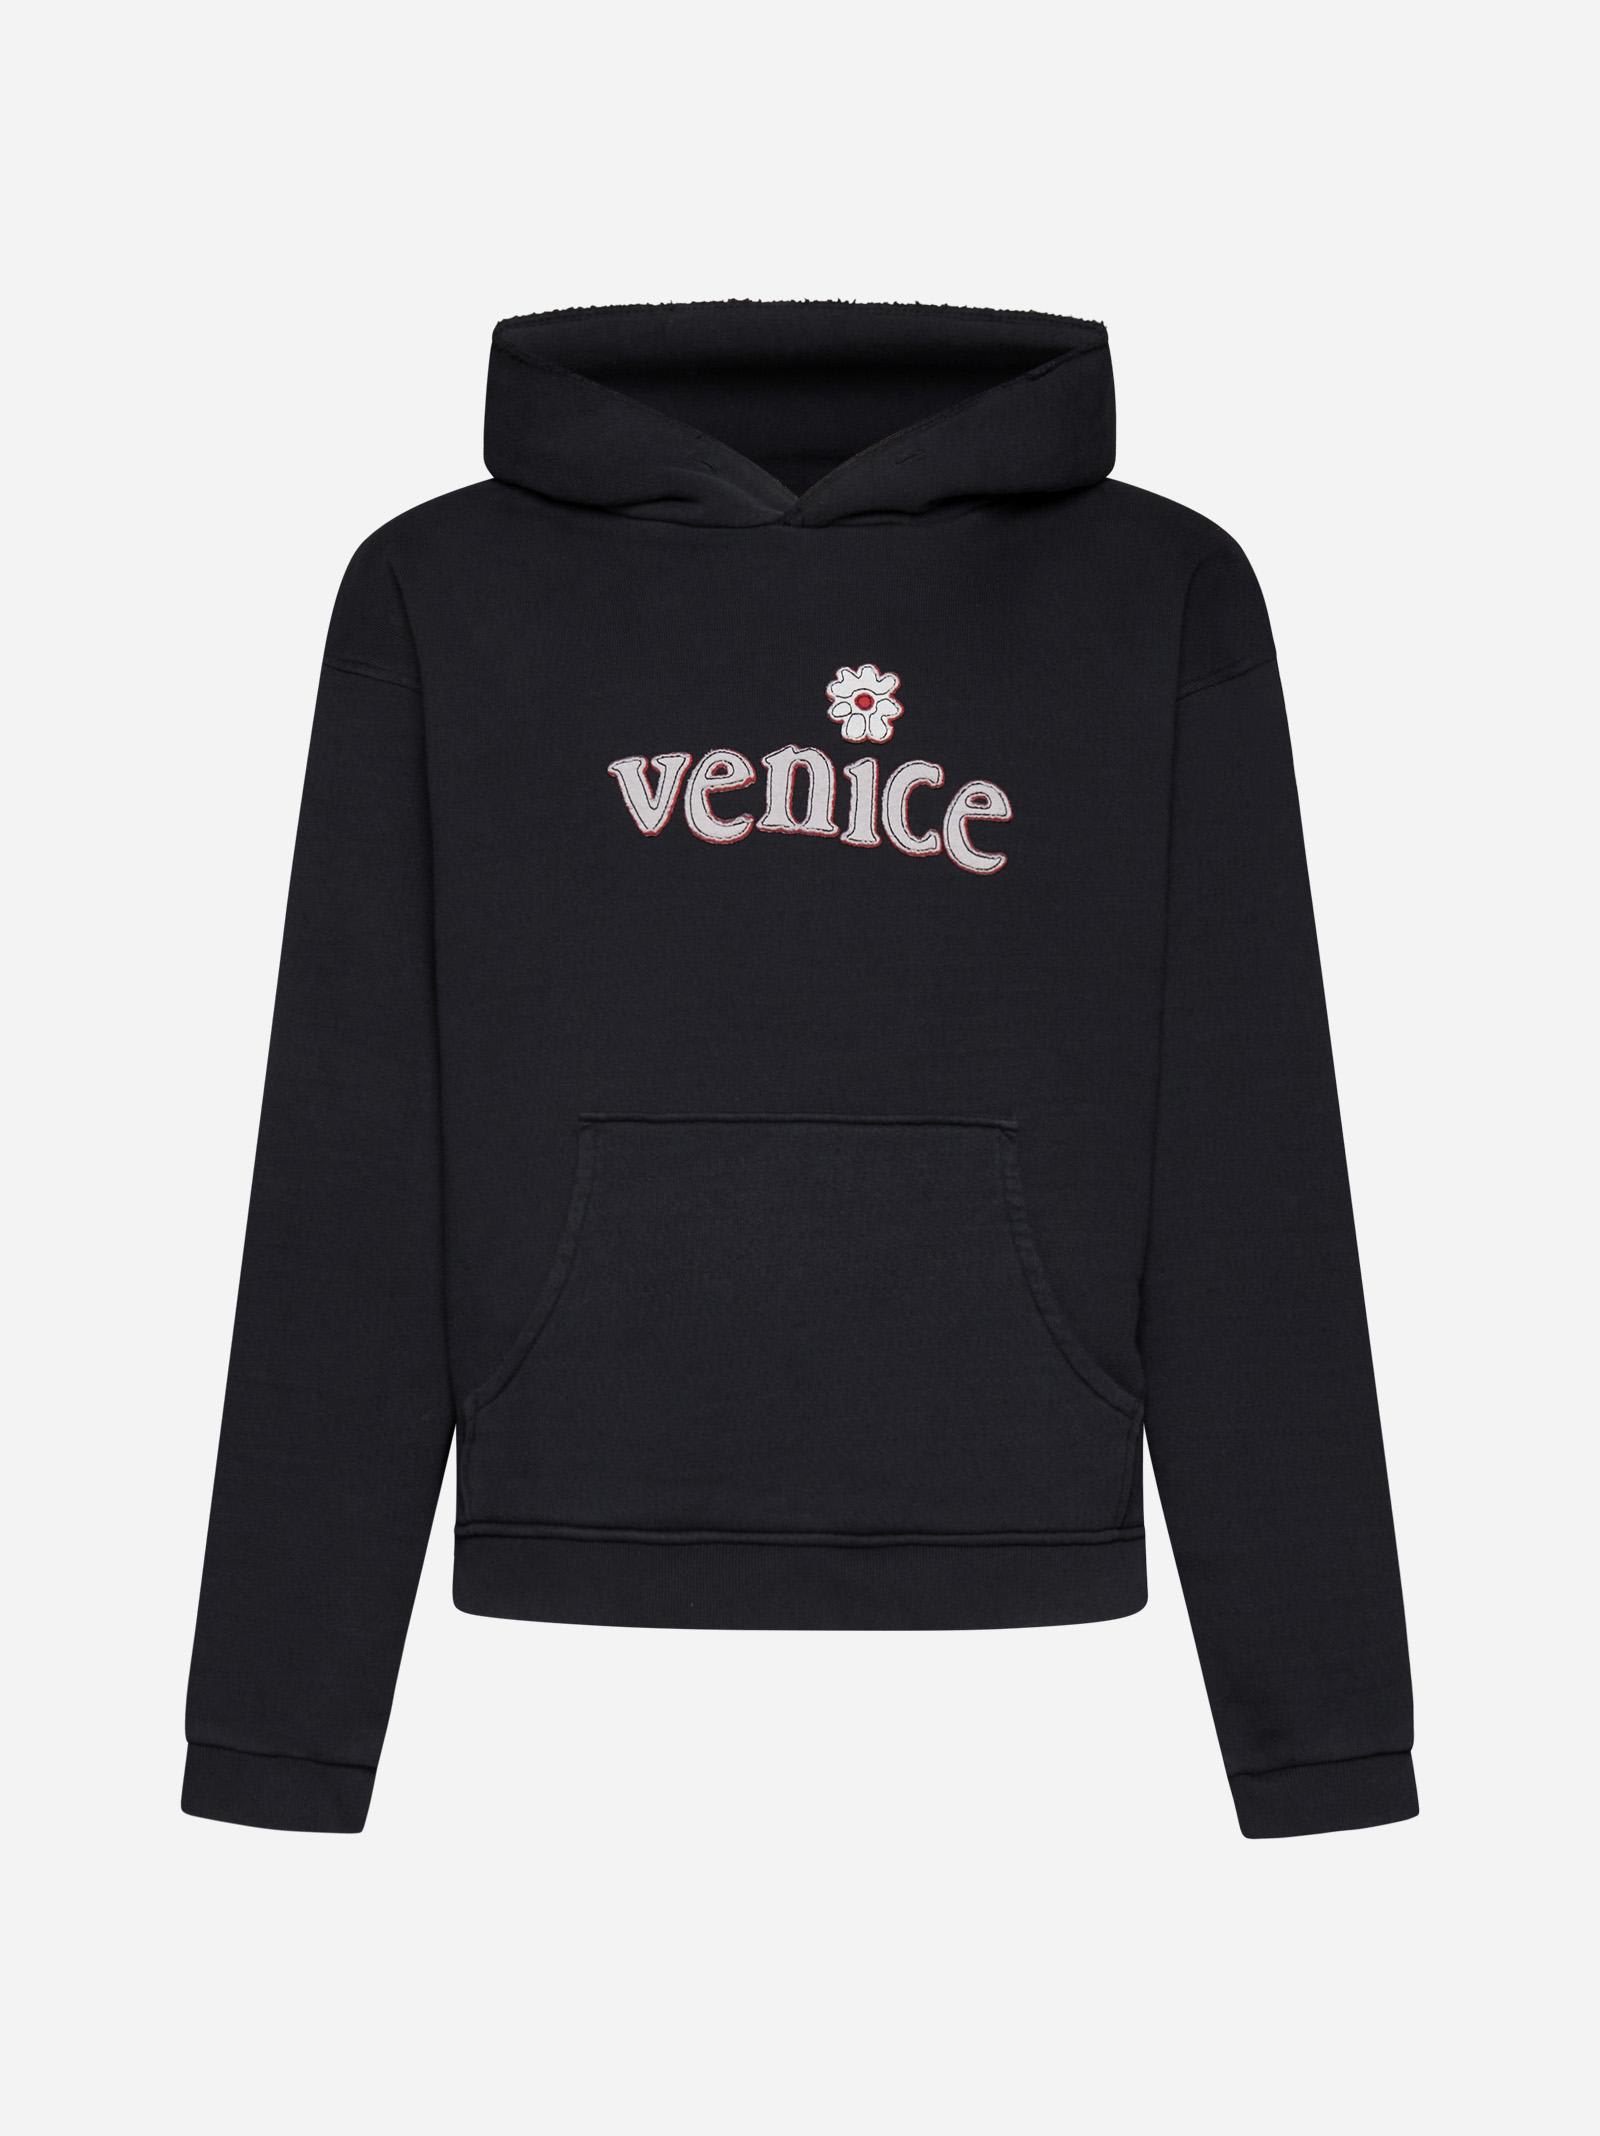 Venice Cotton Hoodie